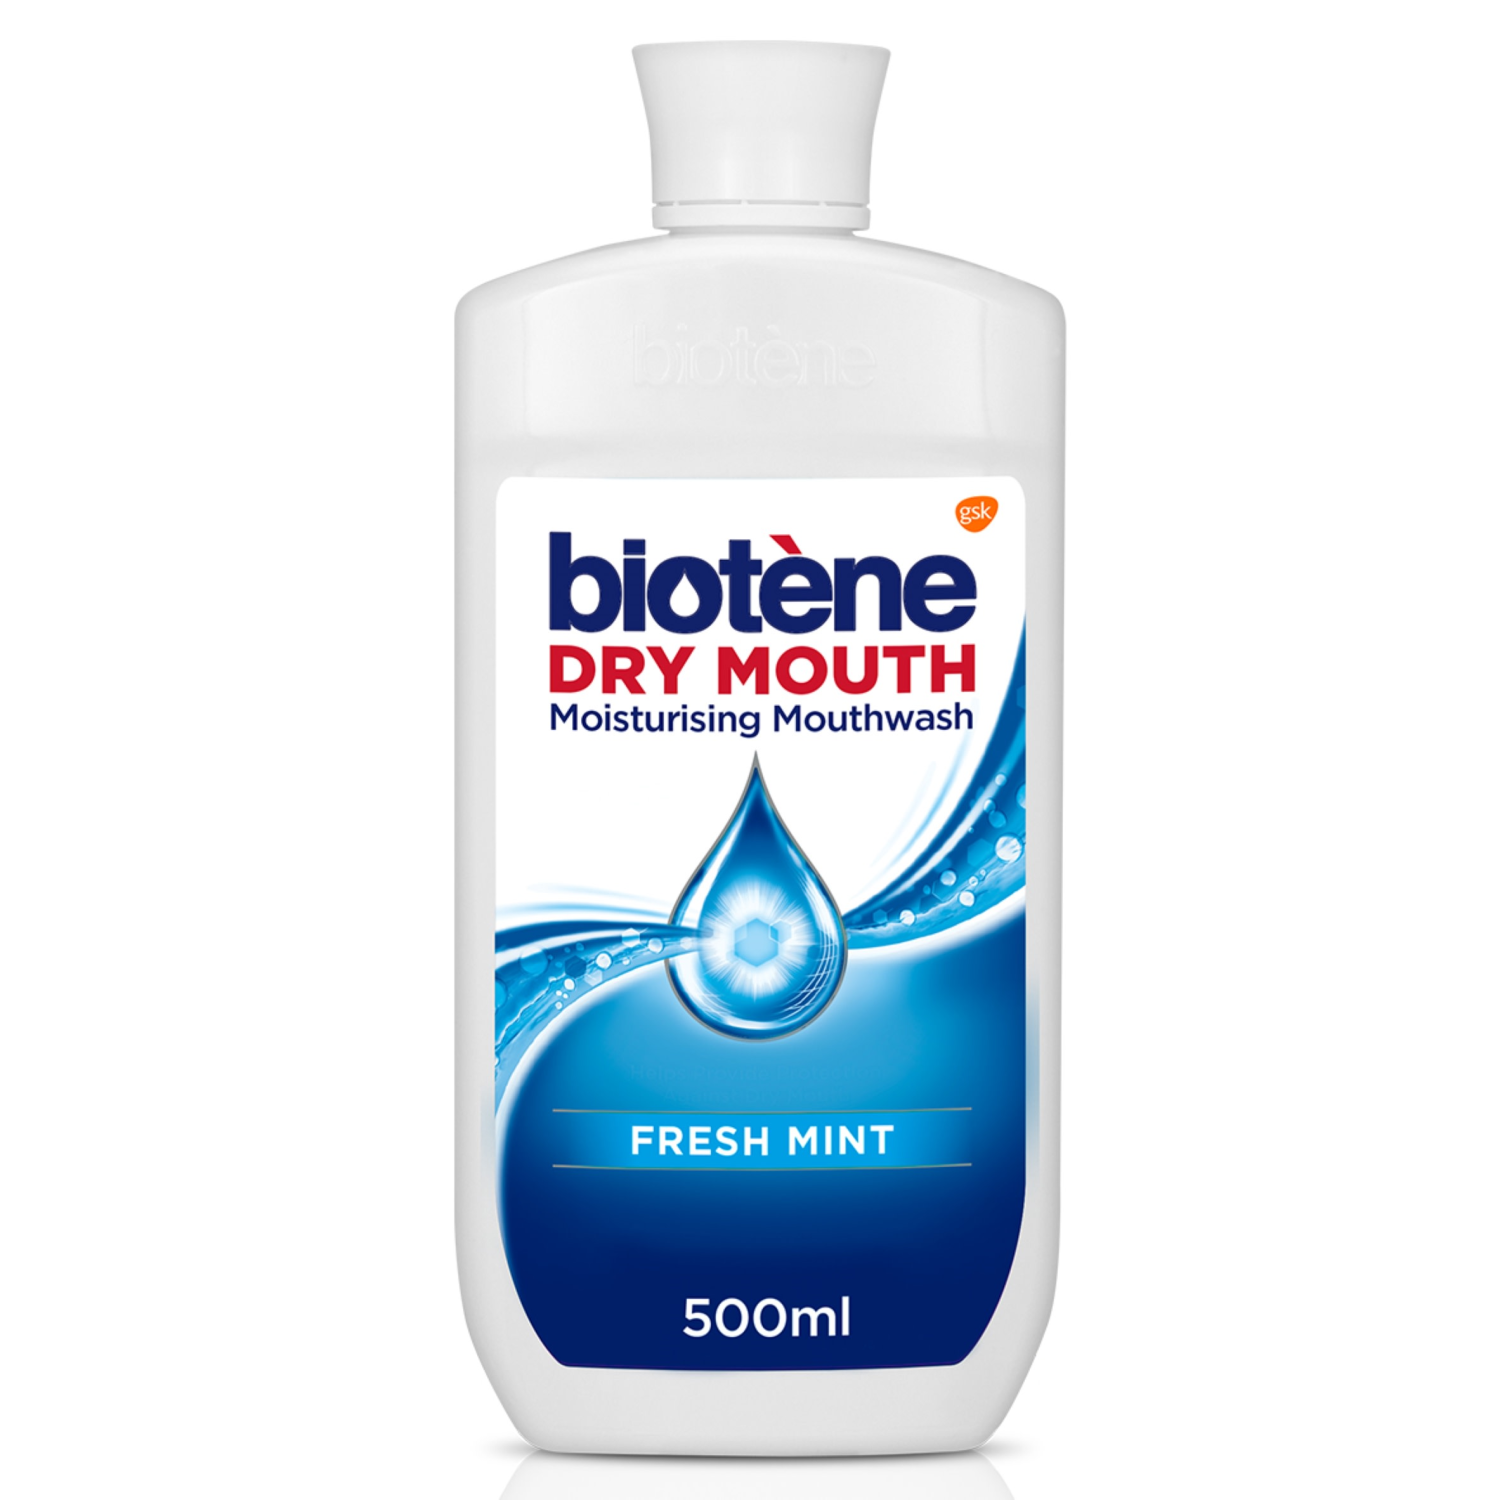 Biotene Dry Mouth Moisturising Mouthwash 500ml